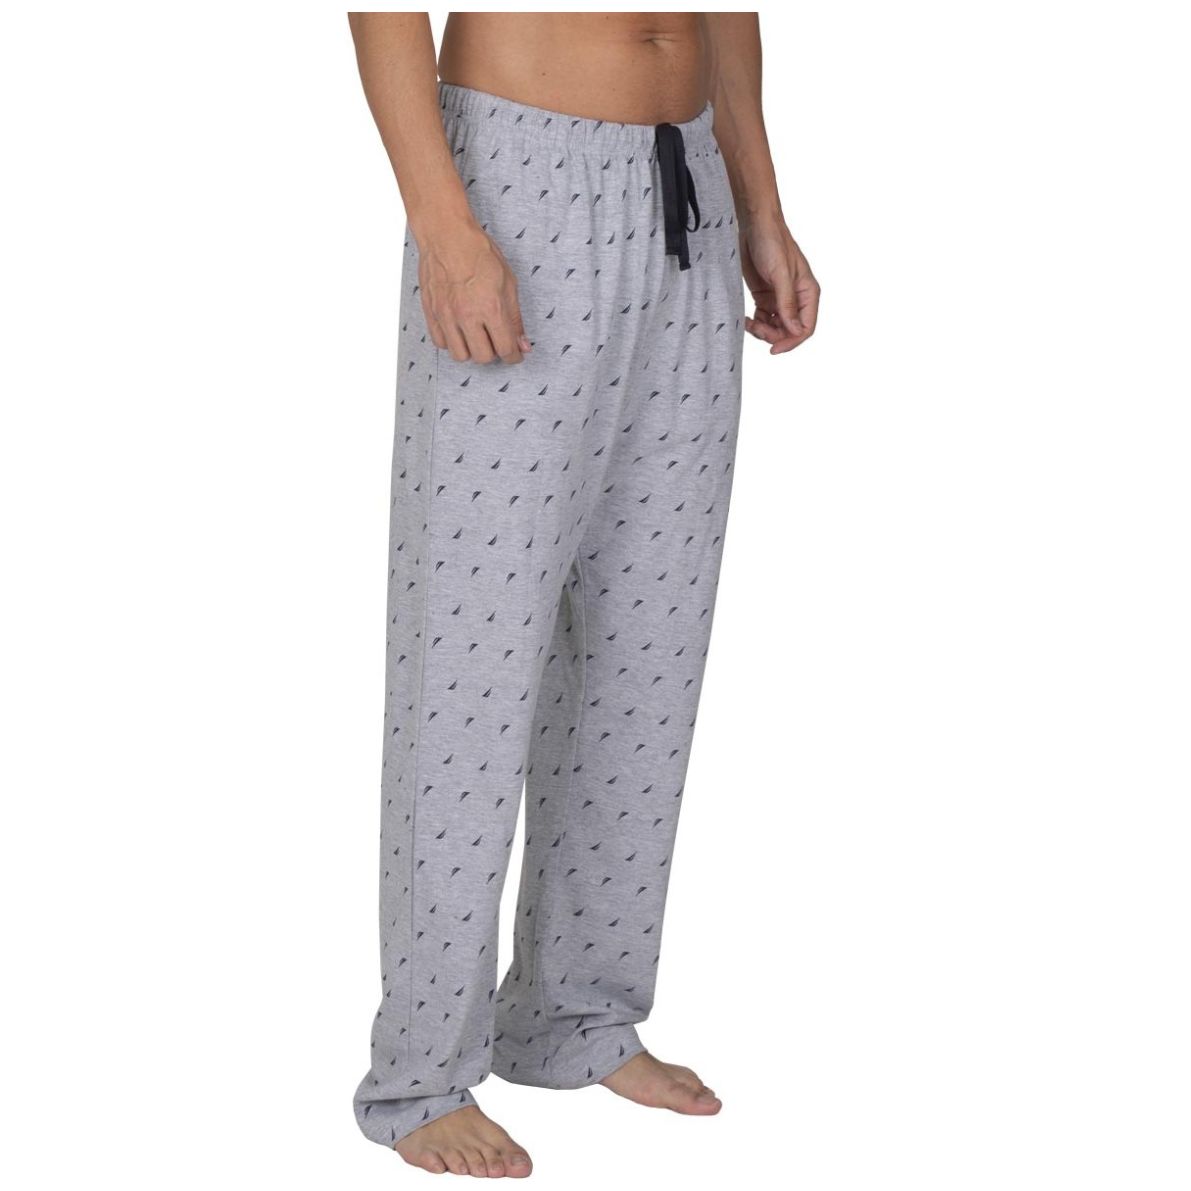 Pantalón pijama Nautica para hombre